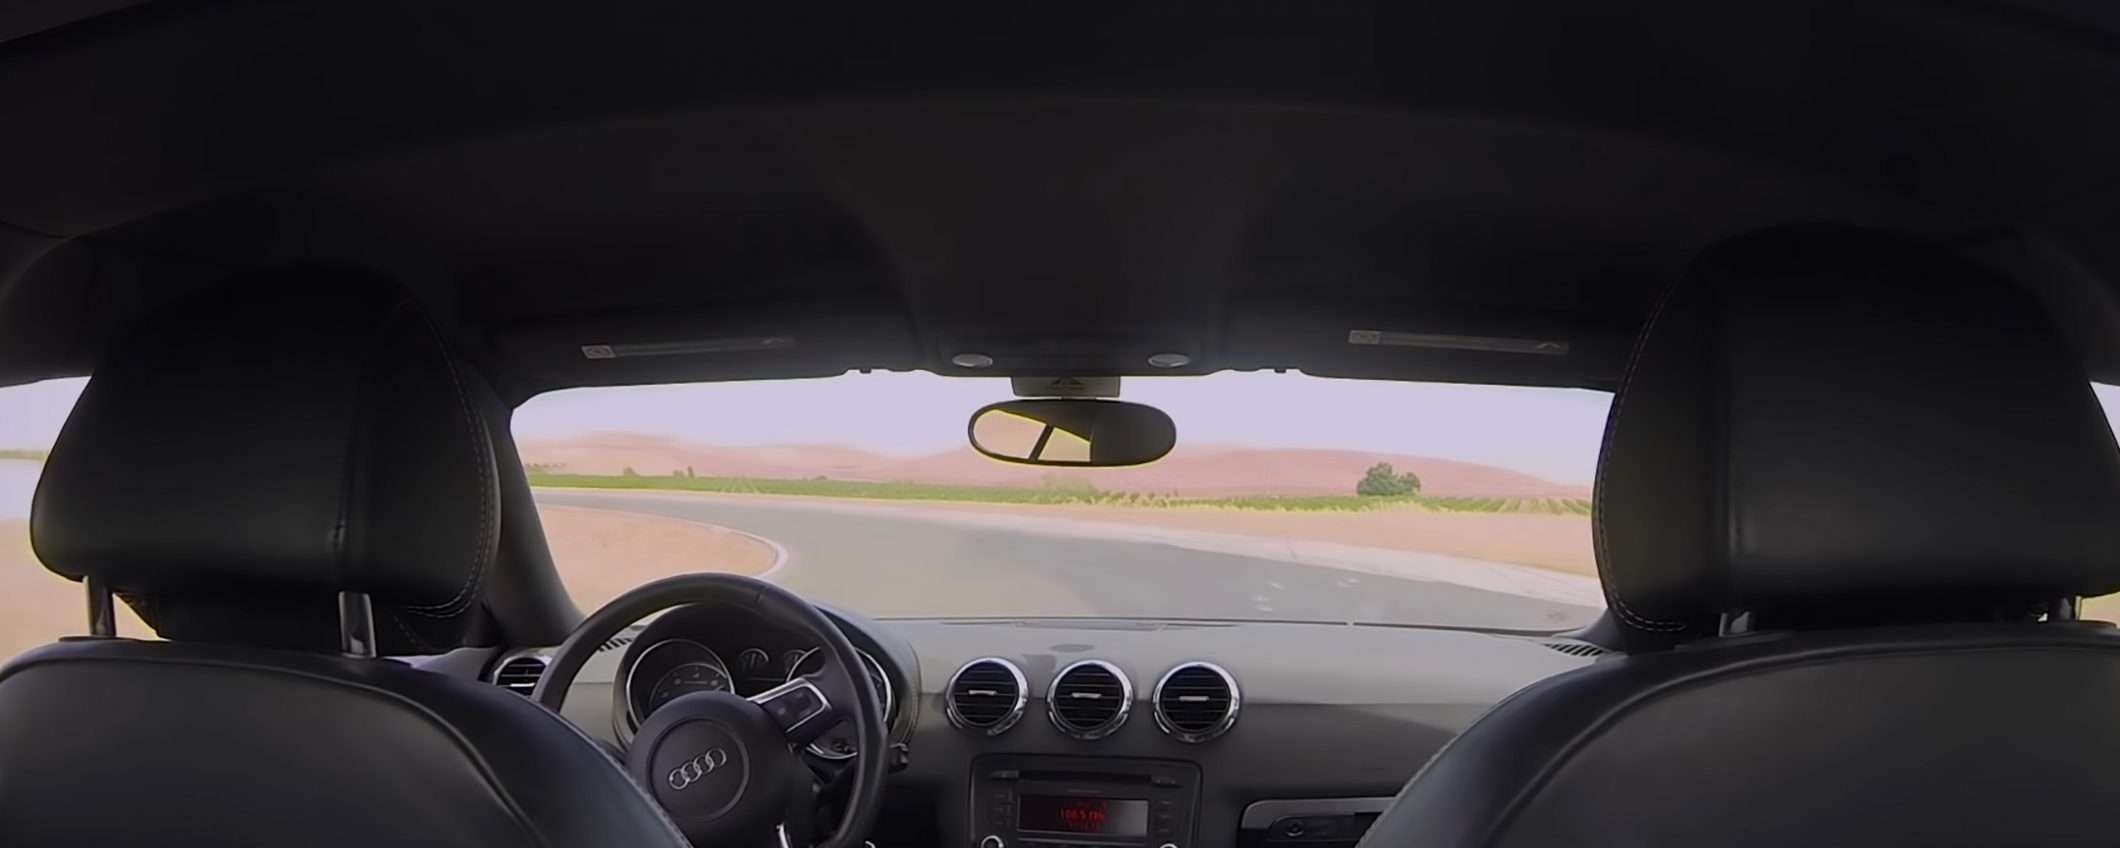 Guida autonoma: una self-driving car in pista